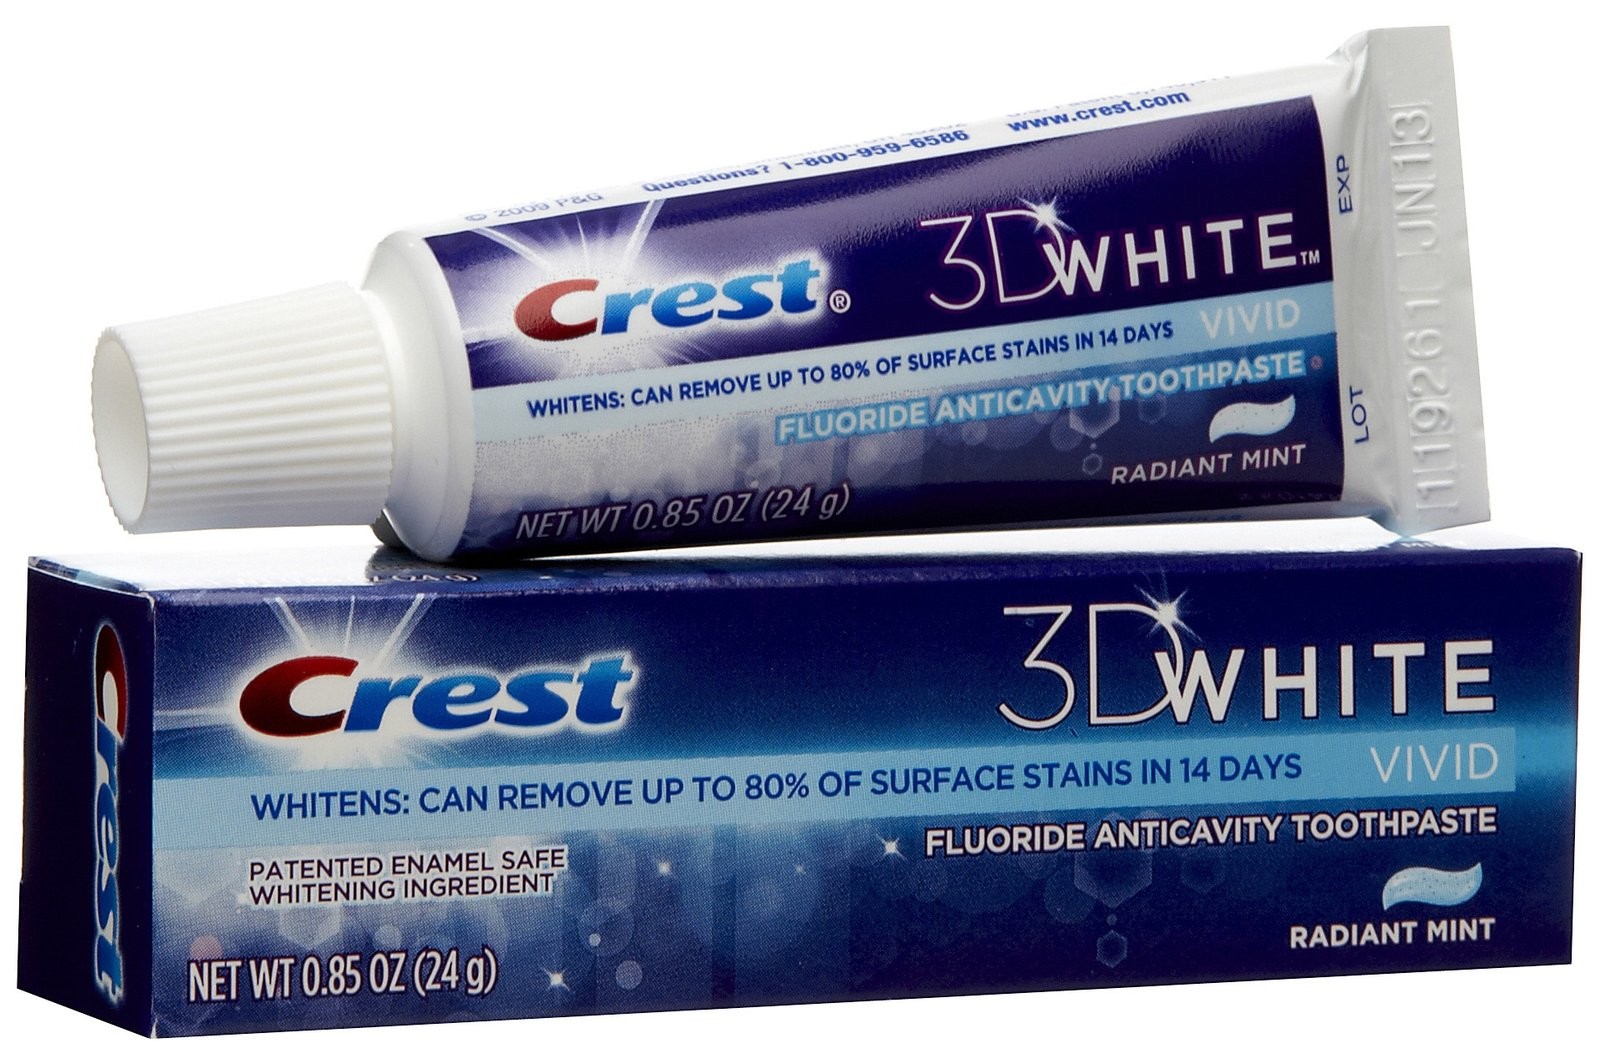 *HOT* Free Crest Toothpaste + $1.00 Moneymaker at Walgreens1600 x 1048